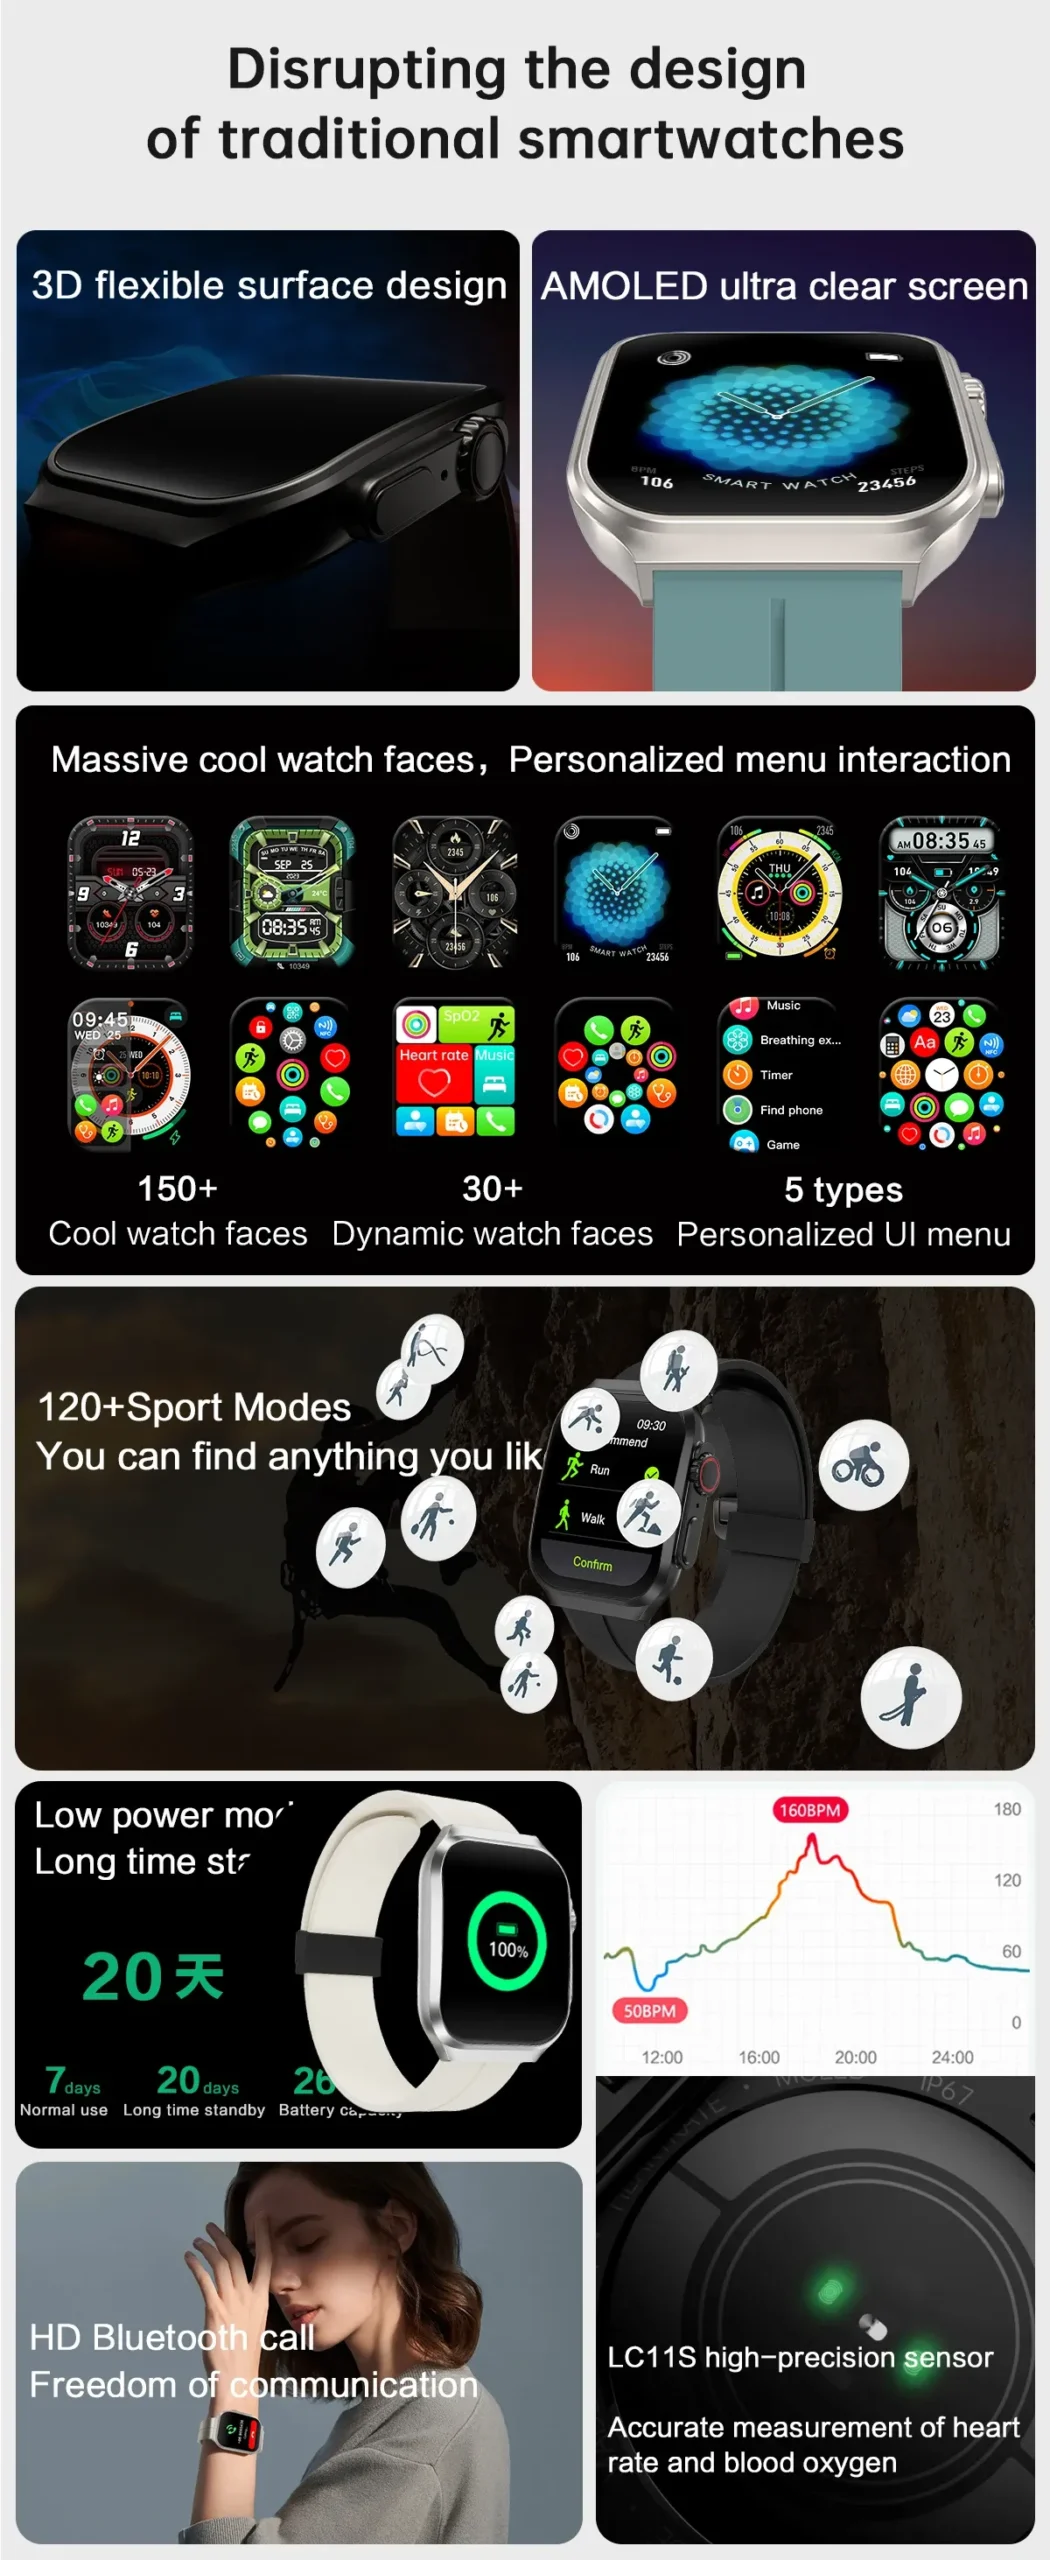 Buy OP88 3D Amoled Display Ultra Smart Watch at best price in Pakistan | Rhizmall.pk